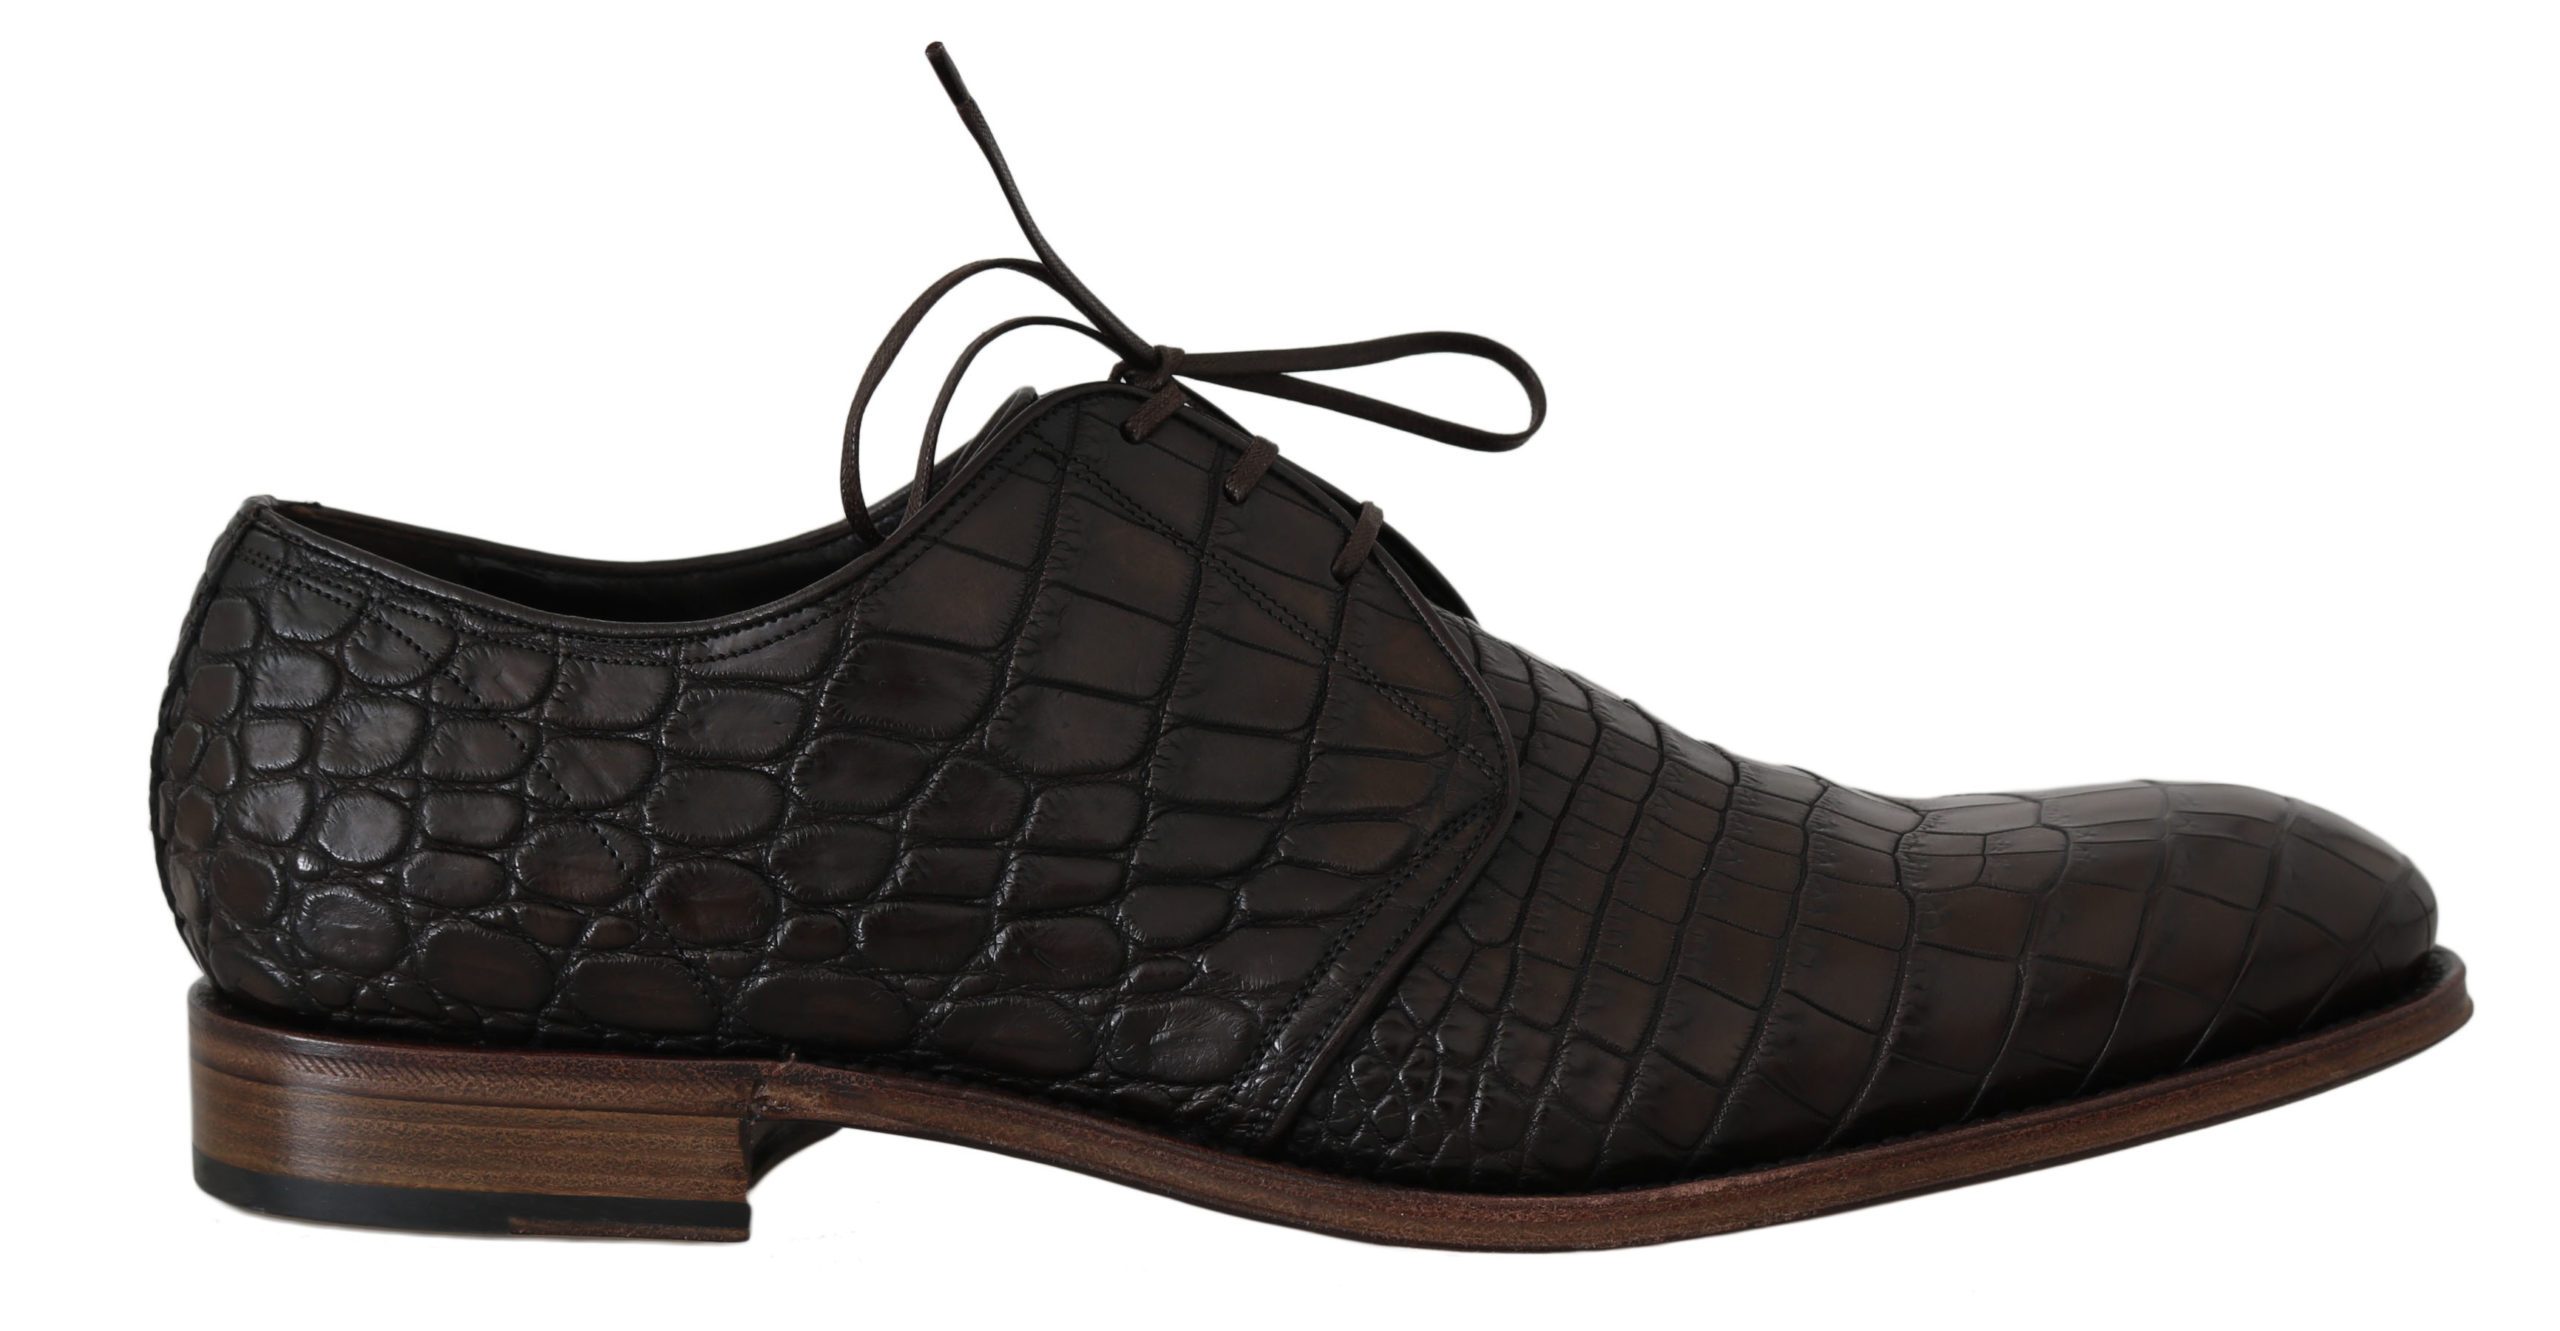 Dolce & Gabbana Men's Patterned Leather Derby Shoes Brown MV2310 - EU44/US11